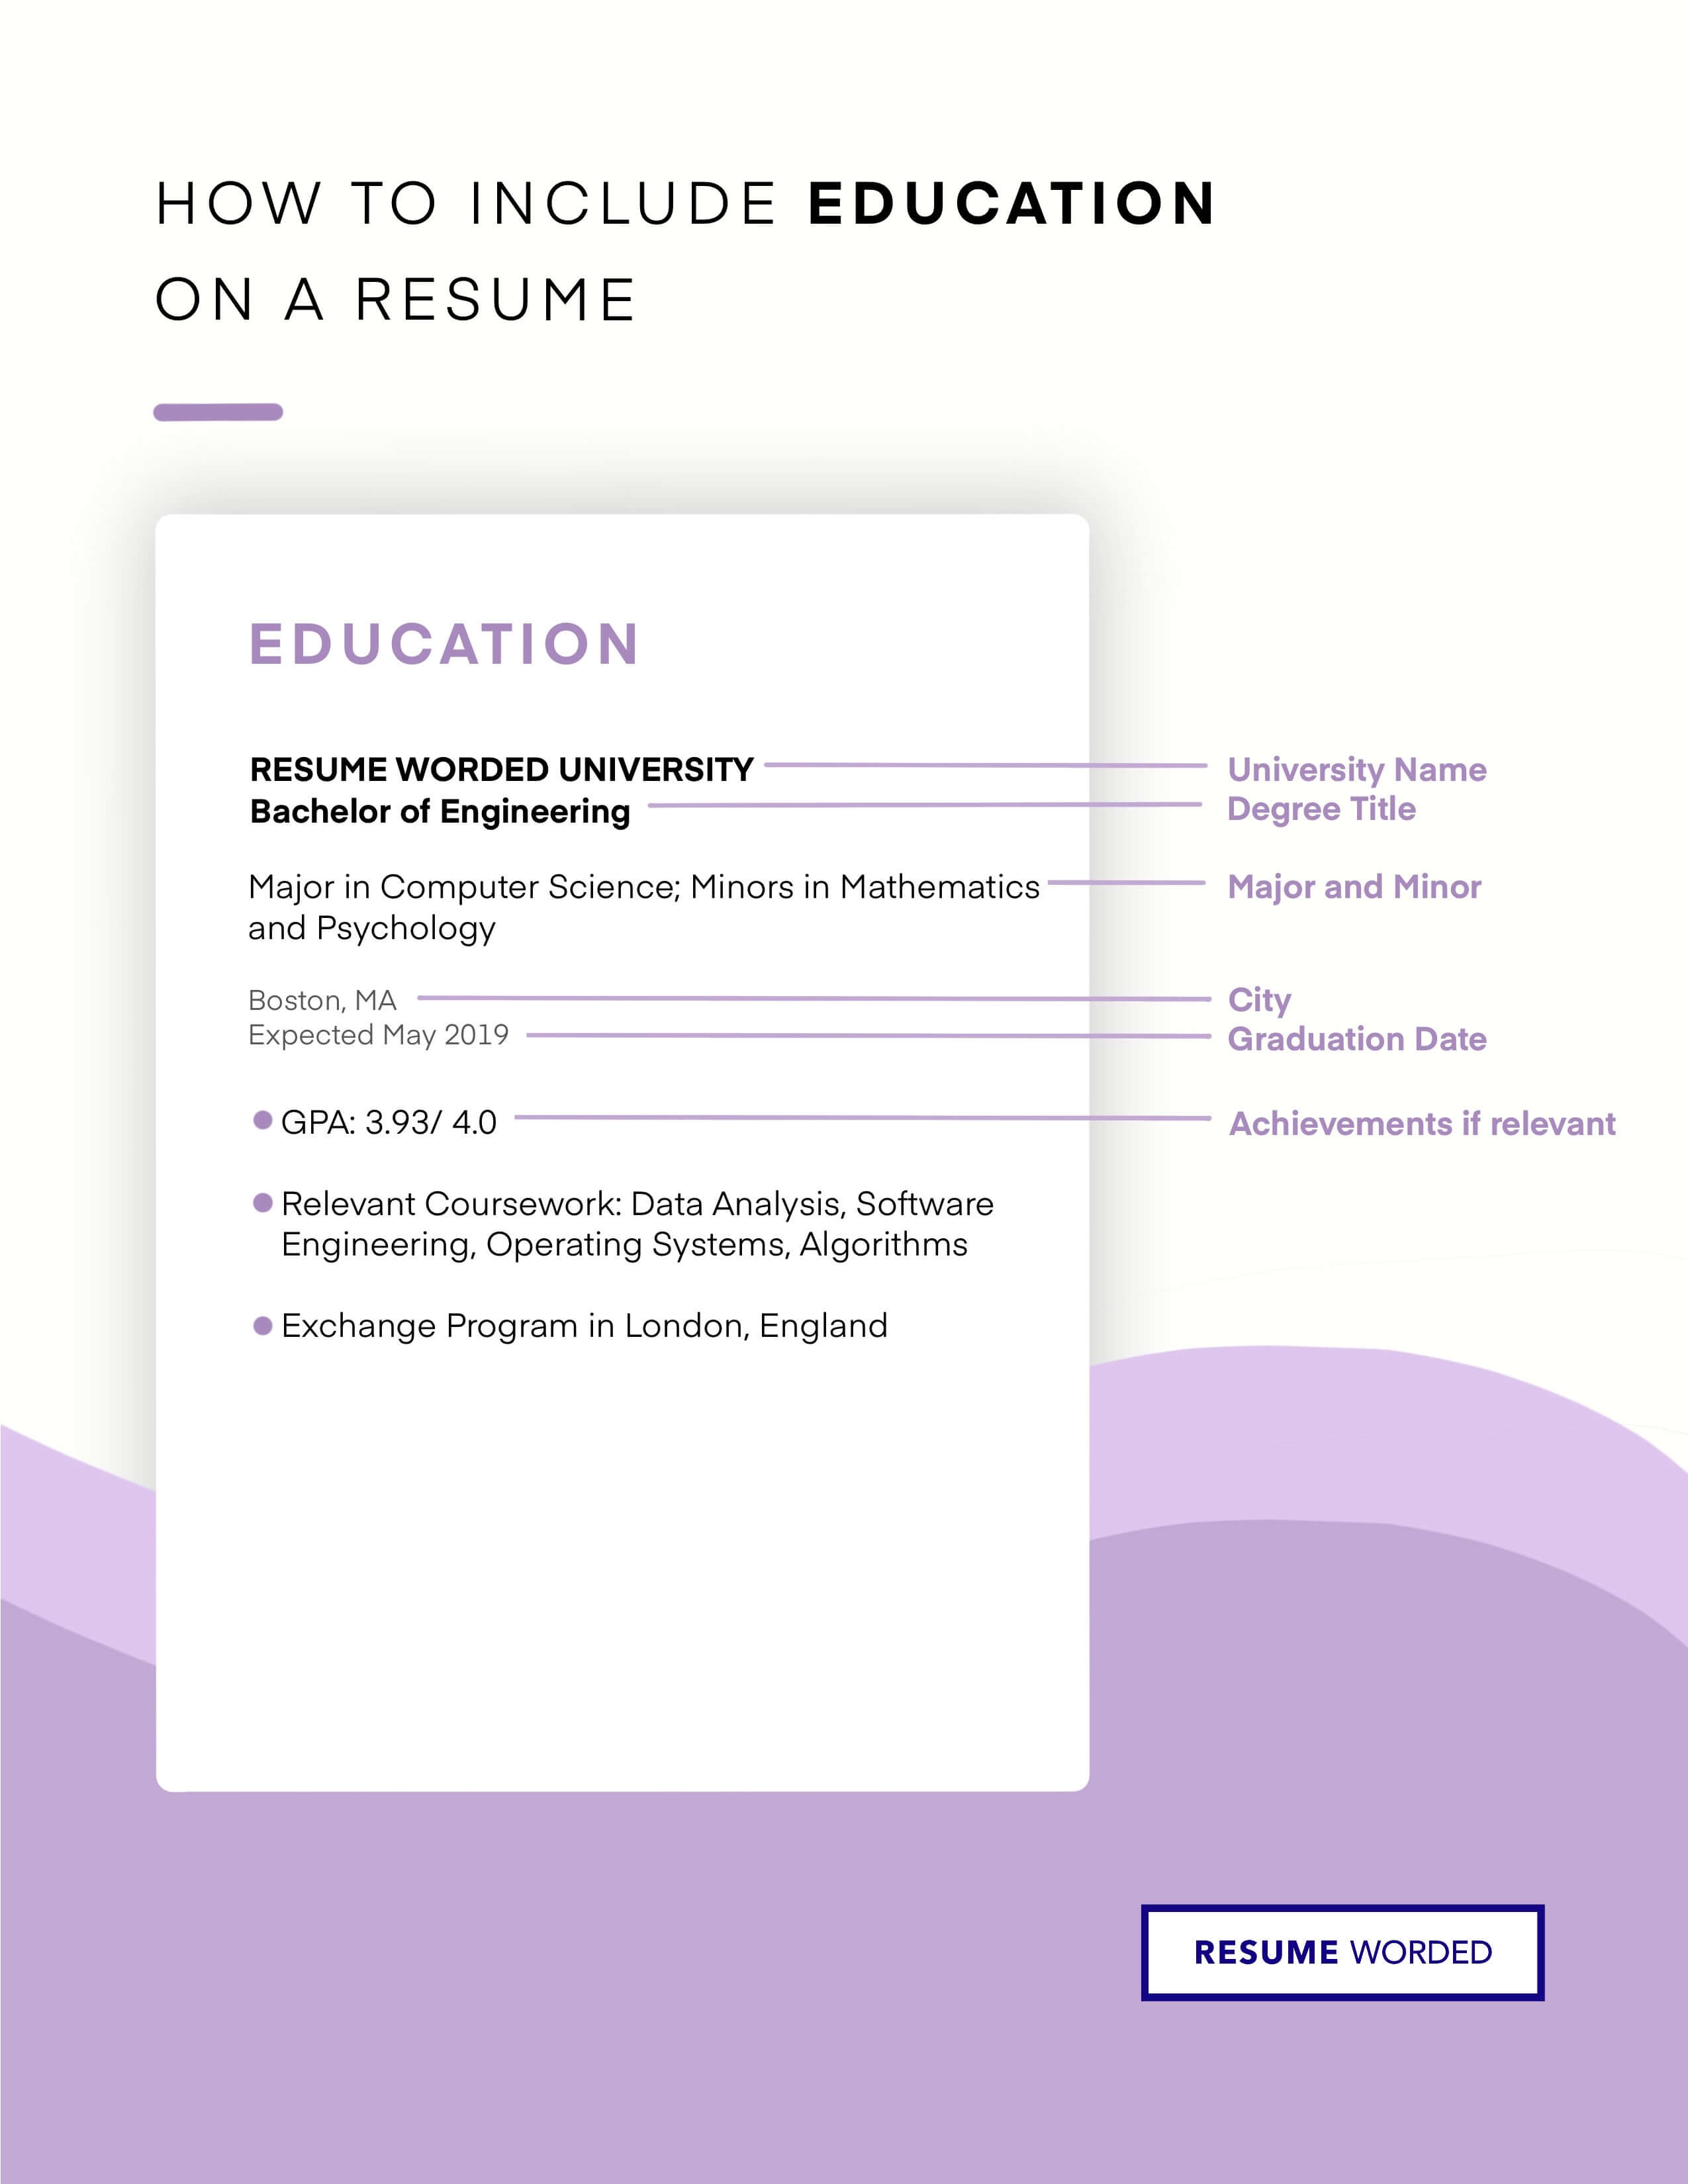 Strong Education section highlighting graphic design interest - Junior Graphic Designer Resume